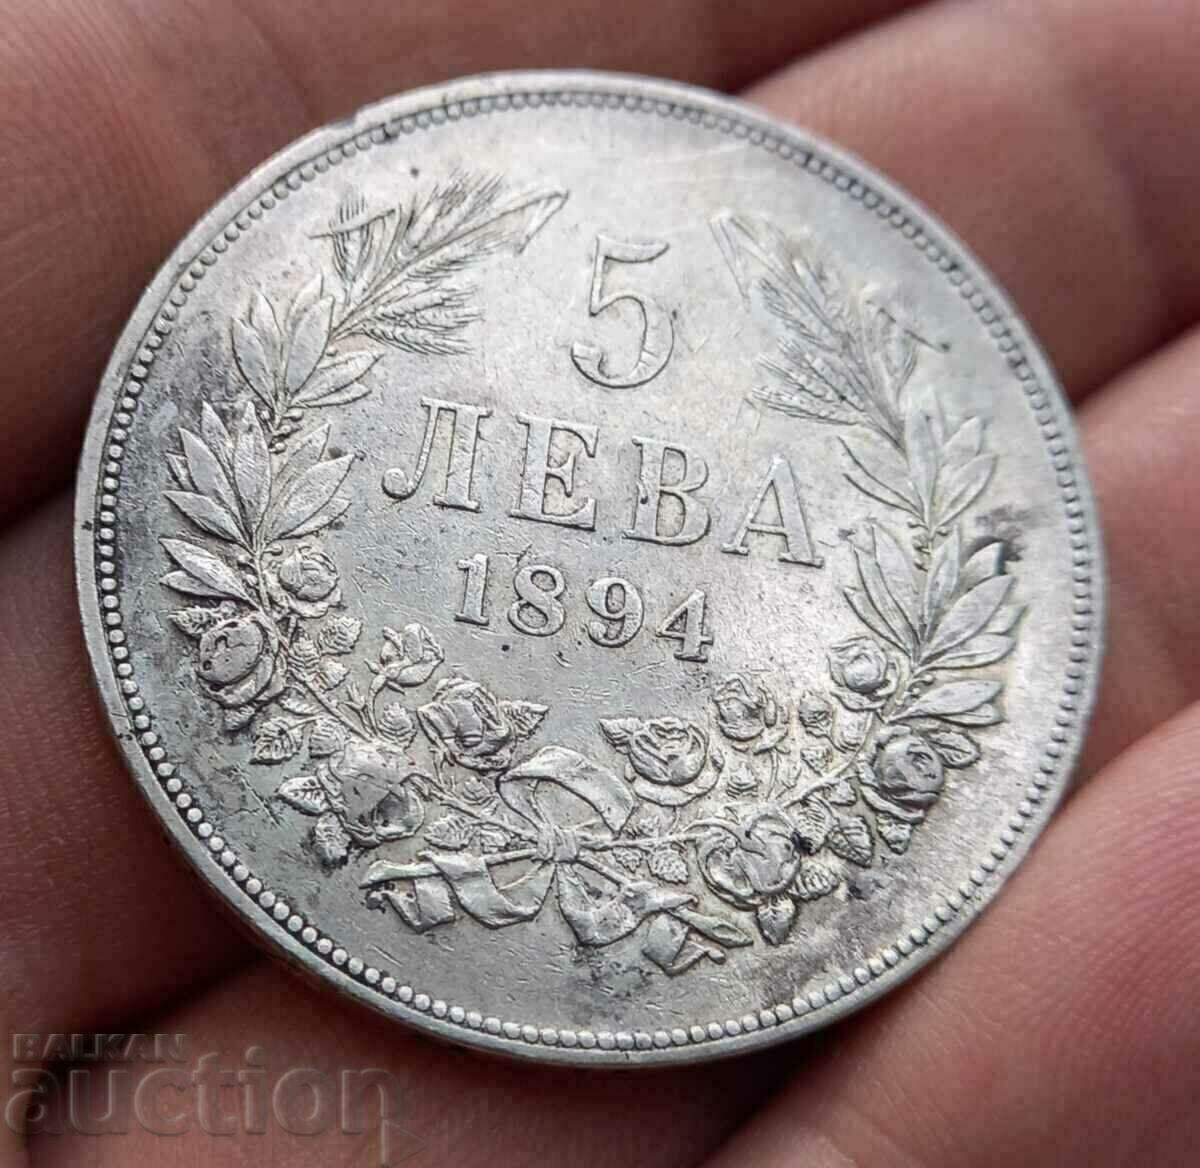 5 BGN 1894 Silver coin